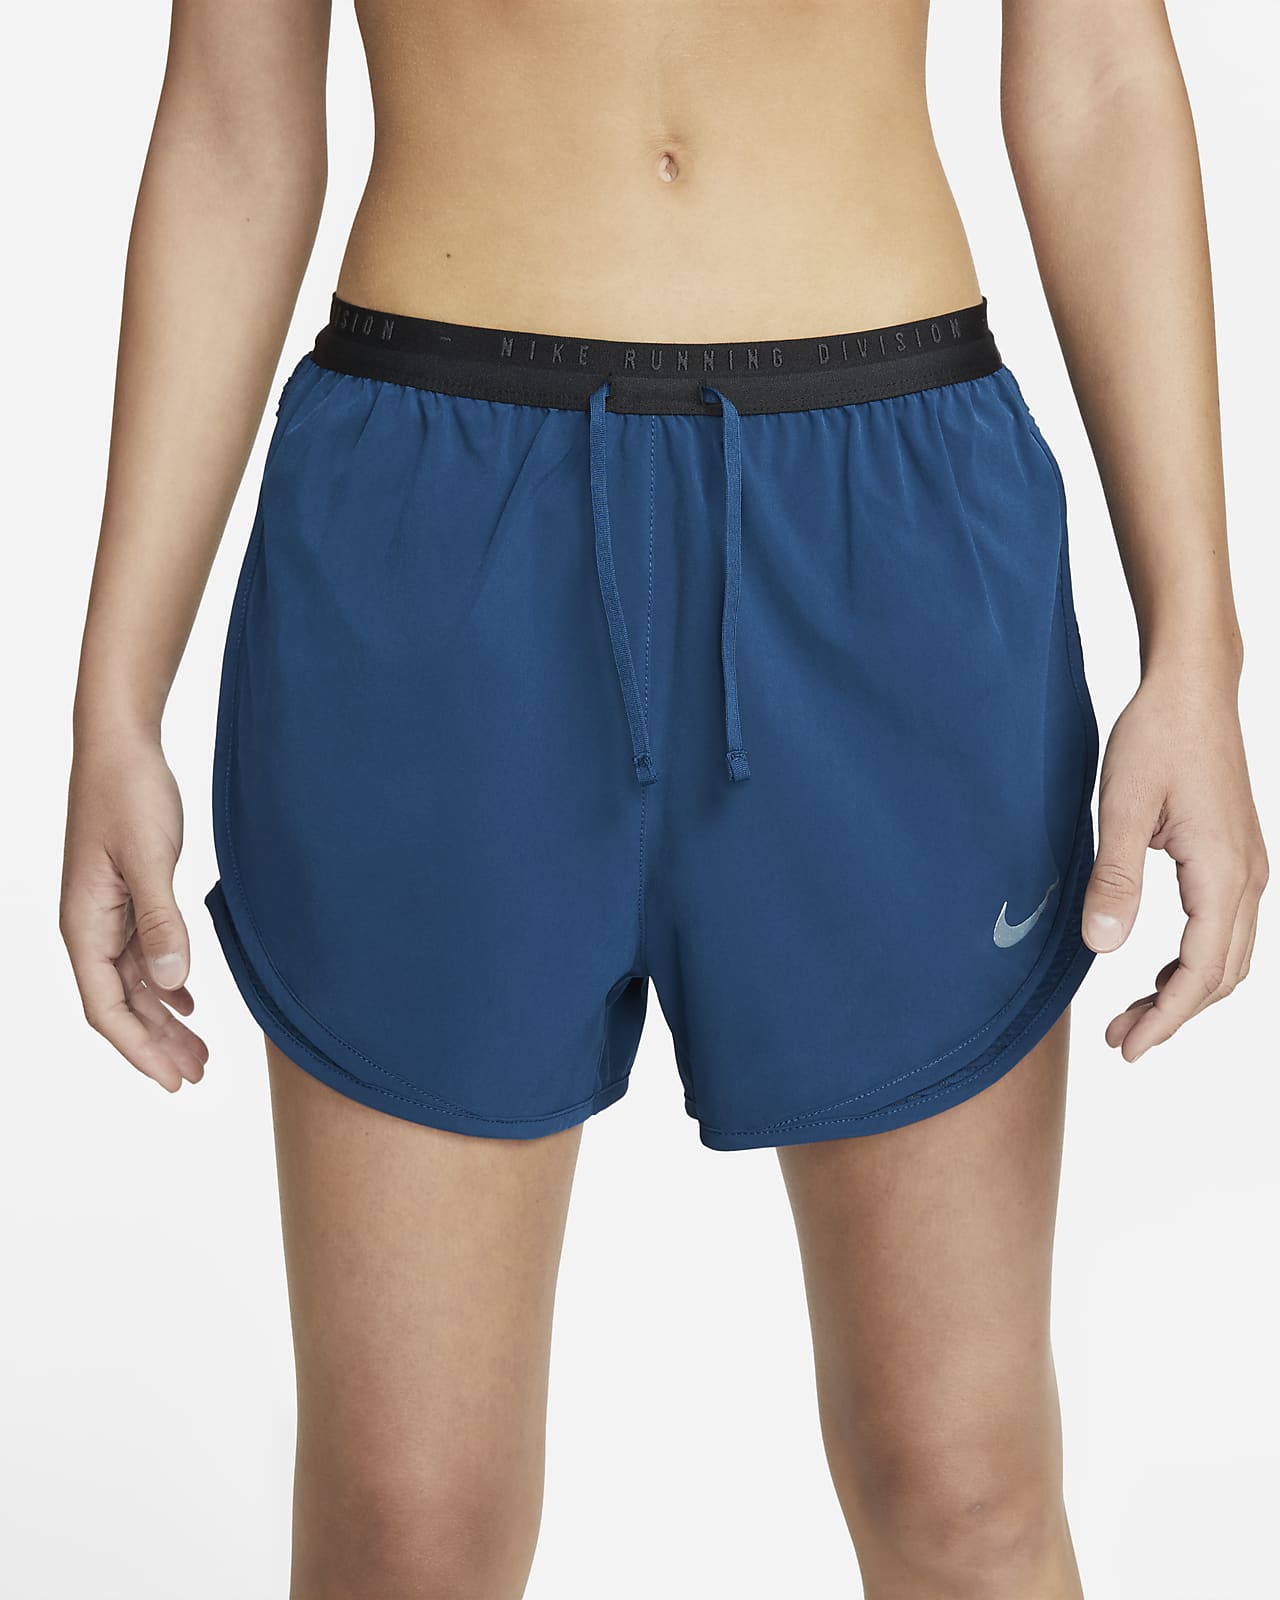 Nike Air Tempo Running Shorts Womens Grey/Black, £10.00